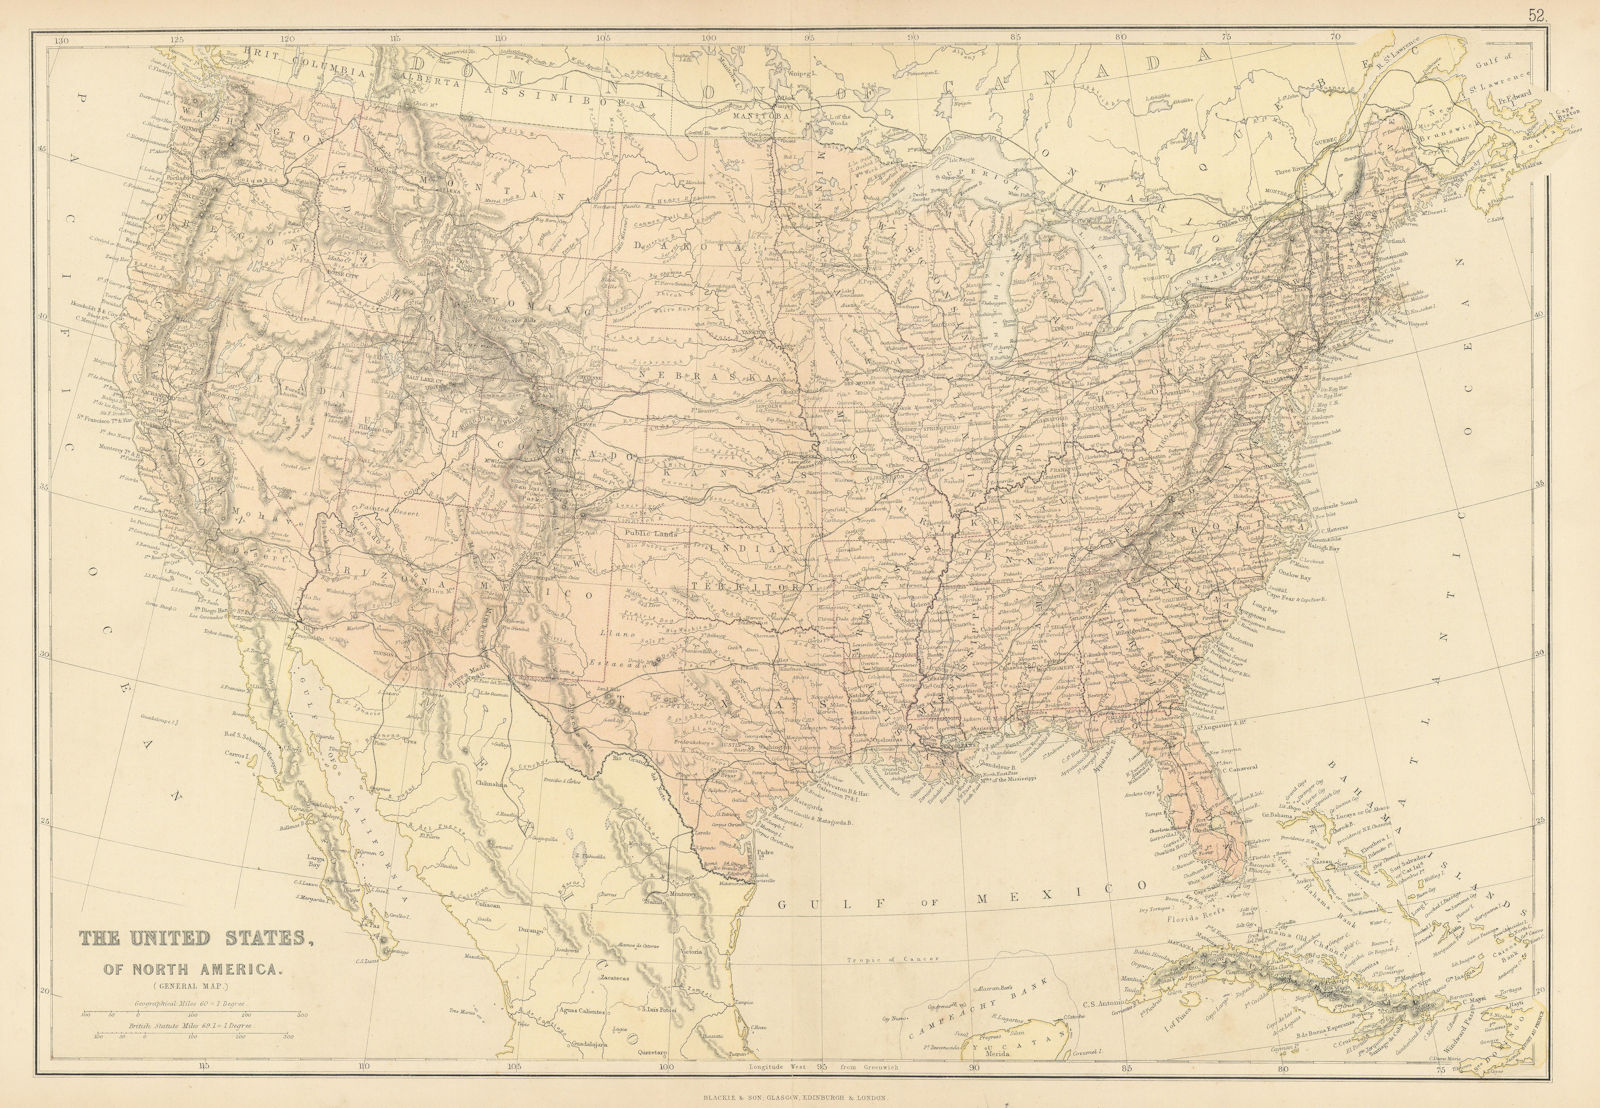 USA. Shows Oklahoma as "Indian Territory". Dakotas as a single state 1886 map